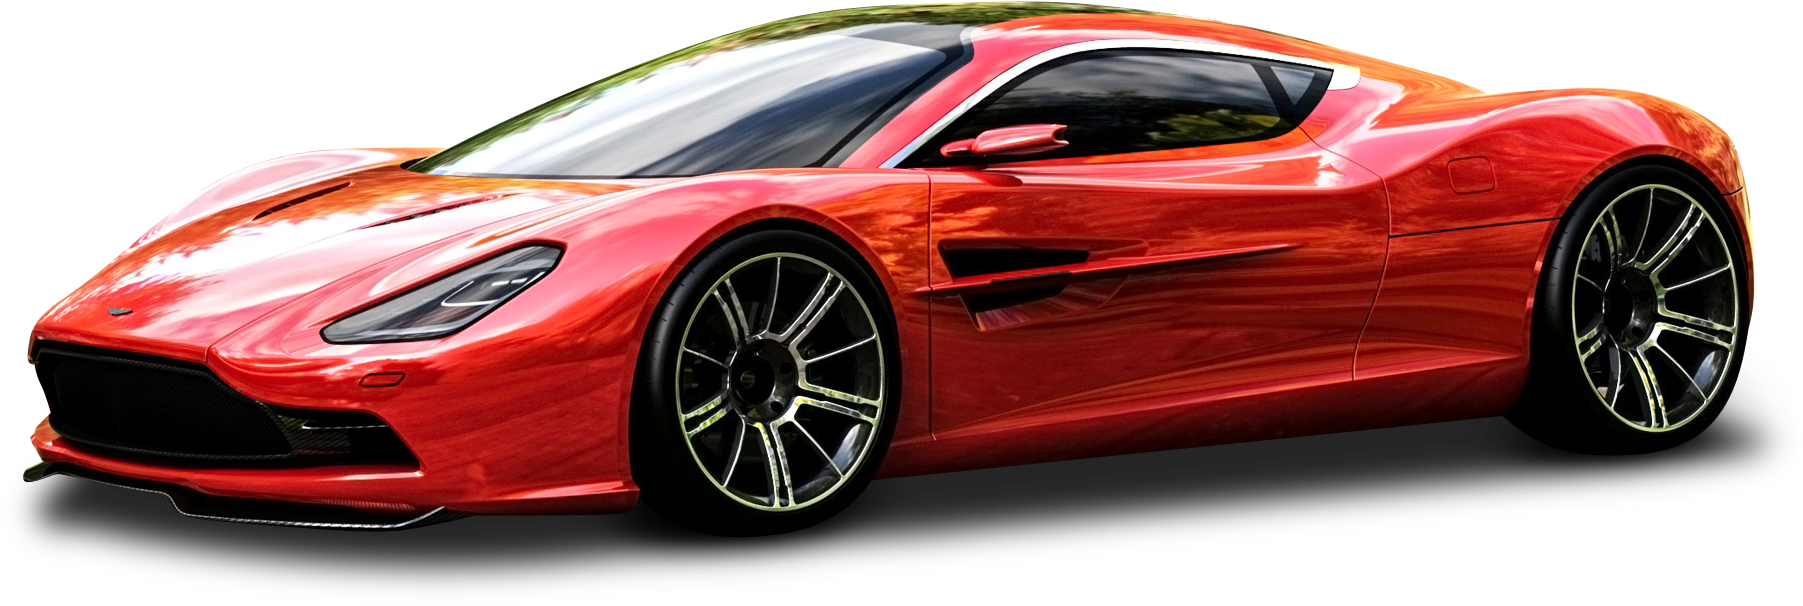 Red Sports Car Sleek Design PNG